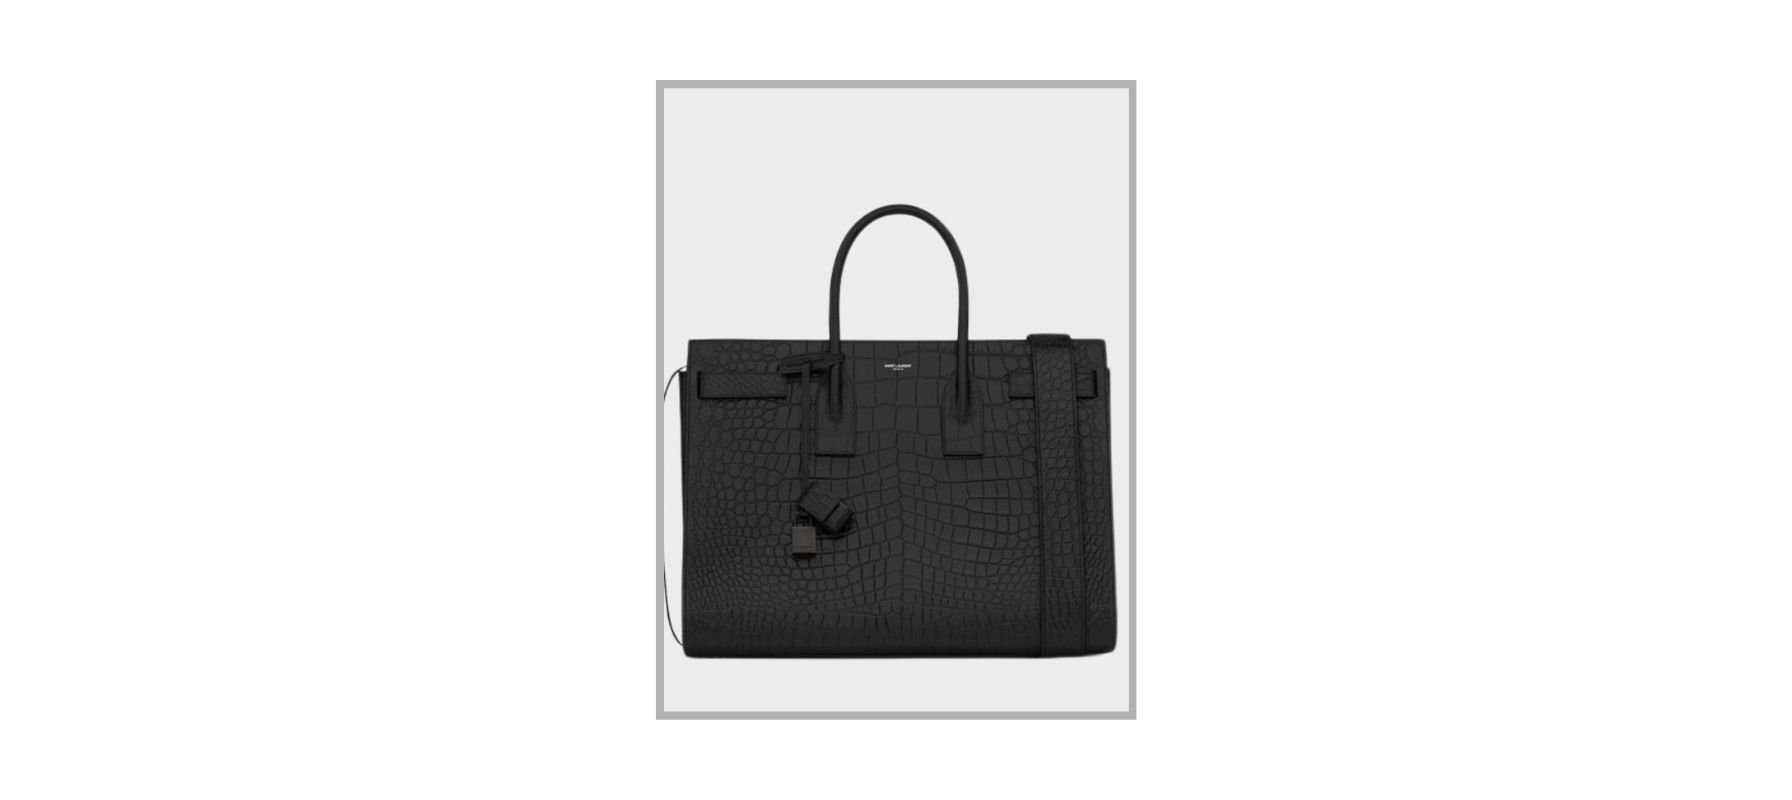 The 12 Most Expensive Handbags in the World – Hermès Birkin Chanel Louis  Vuitton Beyoncè